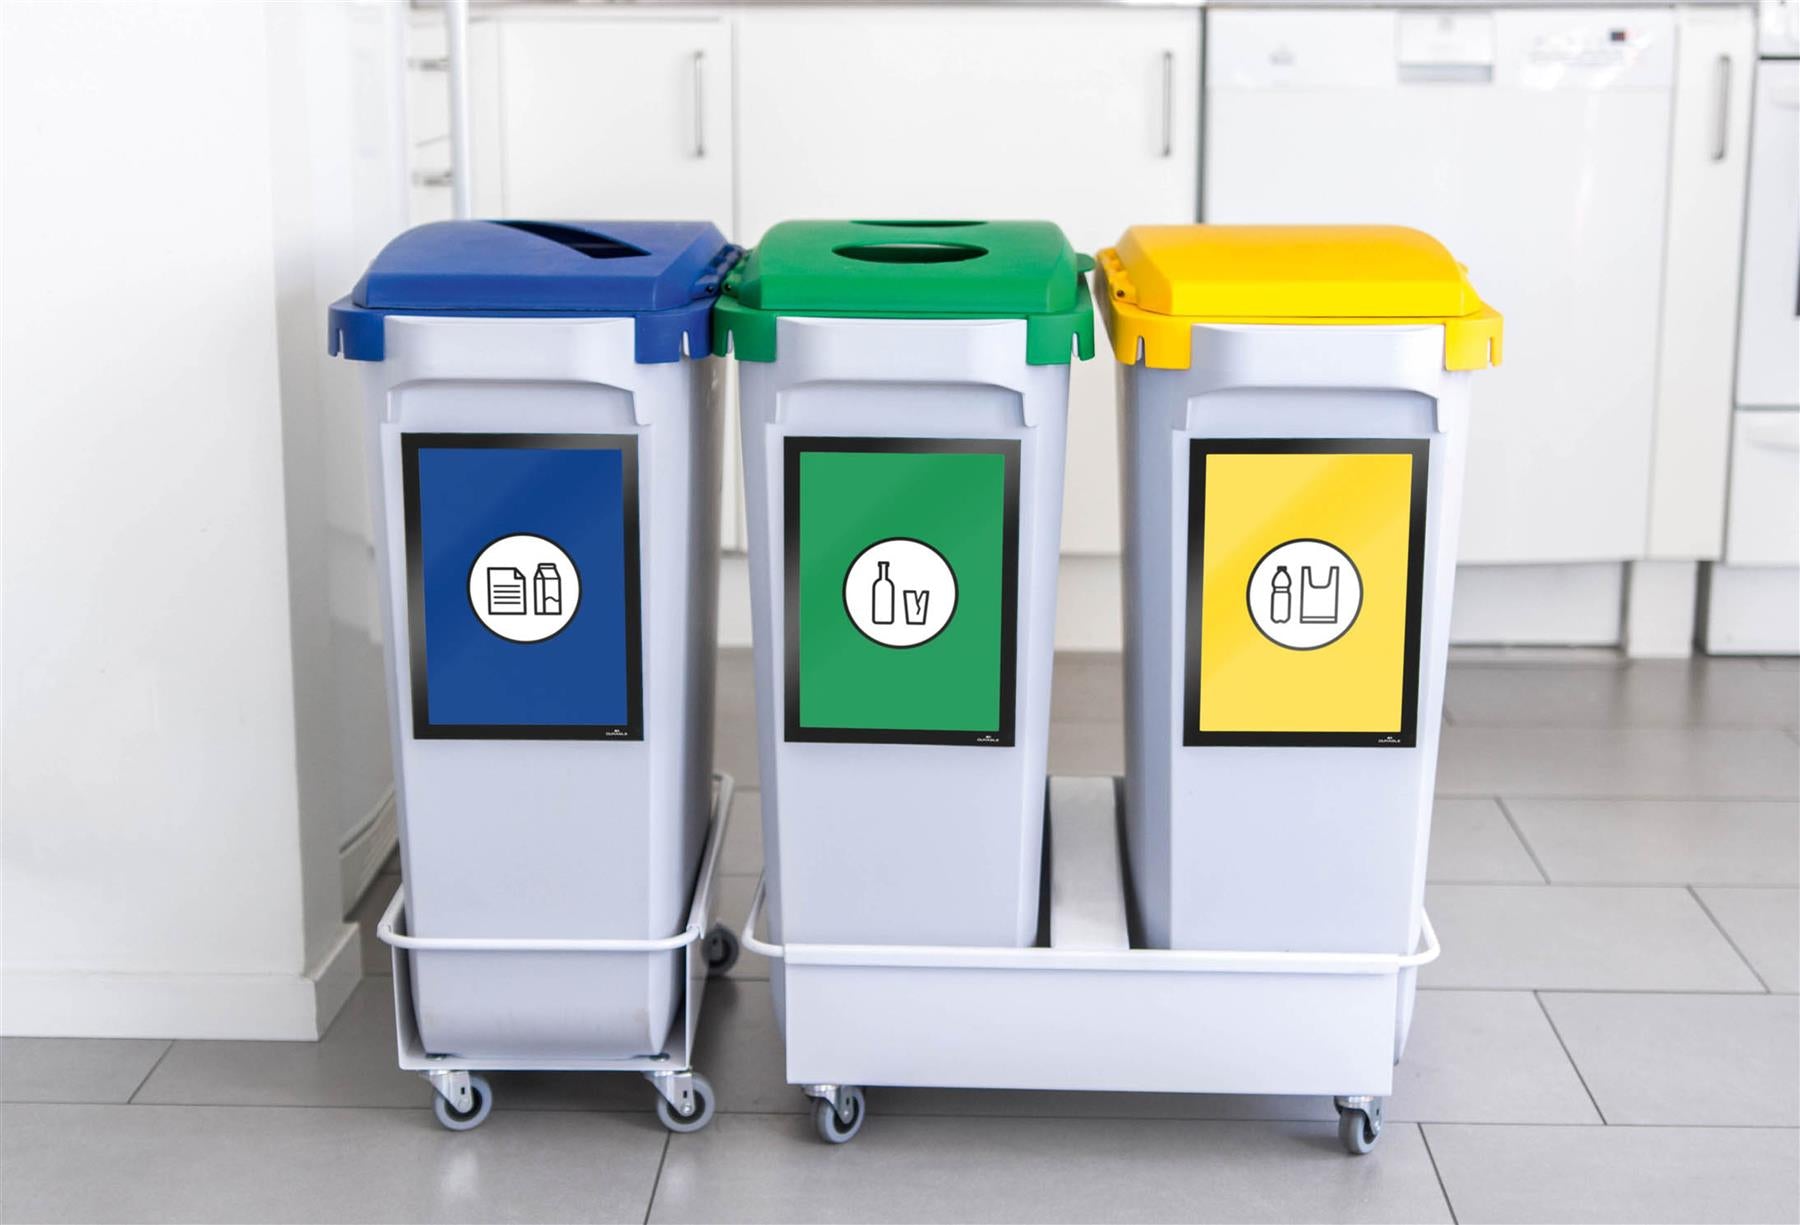 Durable DURABIN 60L Rectangular | Food Safe Waste Recycling Bin | Grey